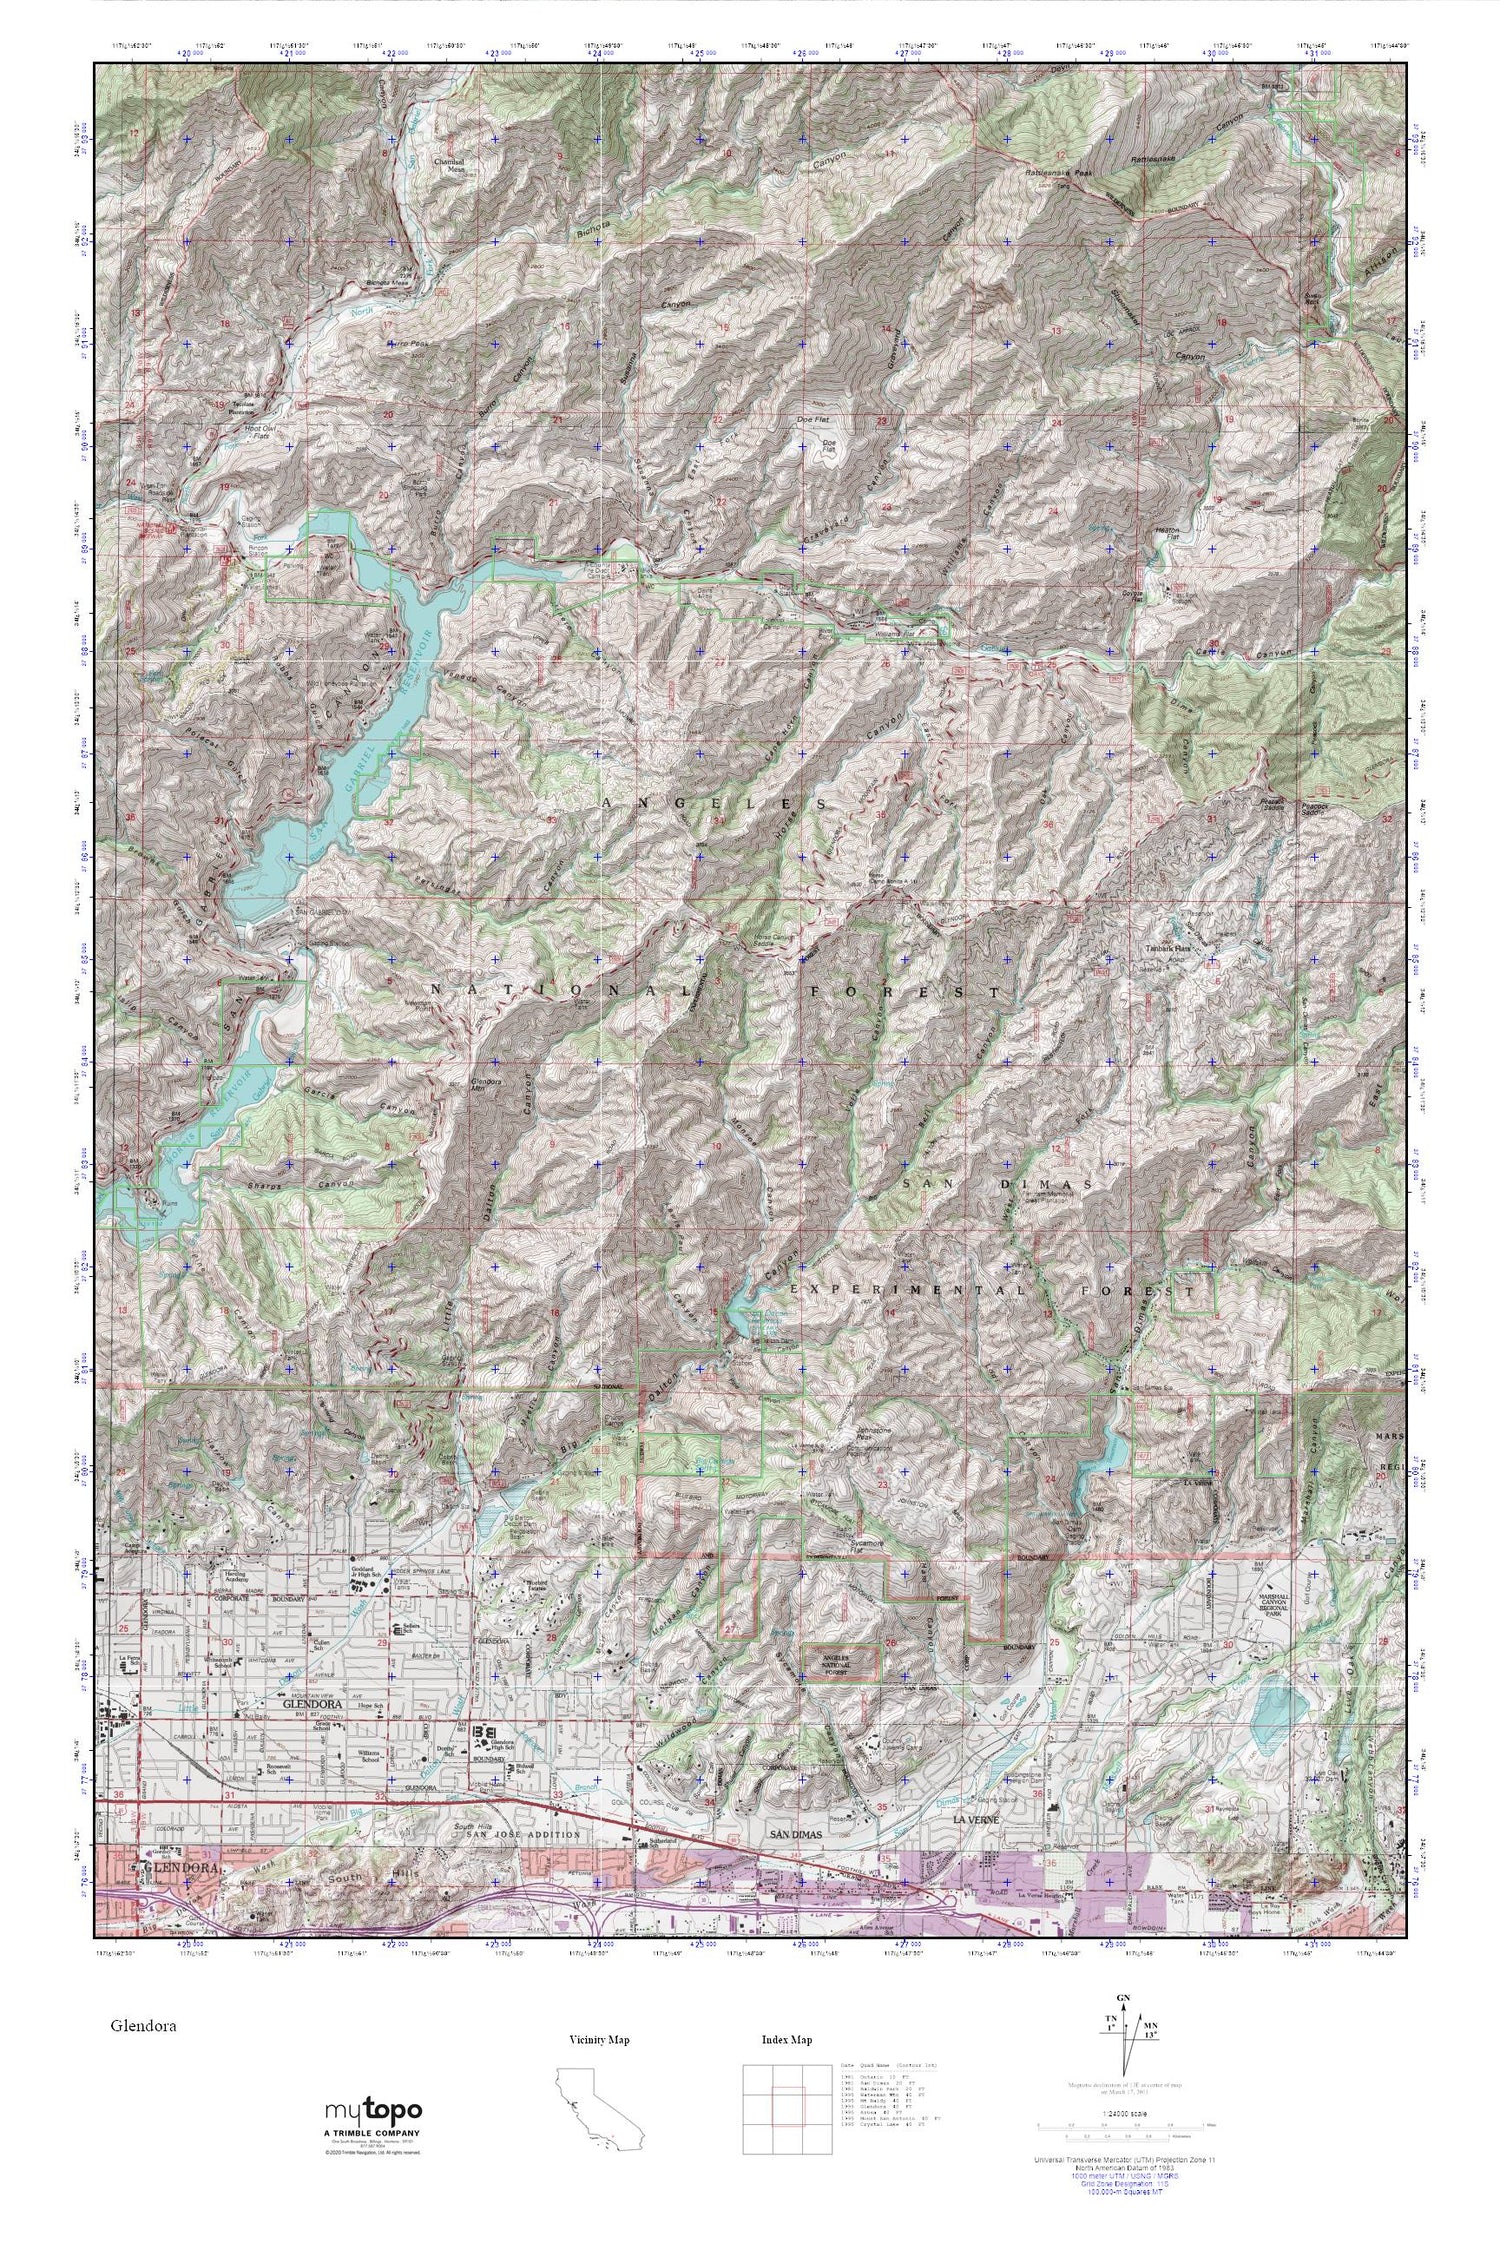 Glendora MyTopo Explorer Series Map Image